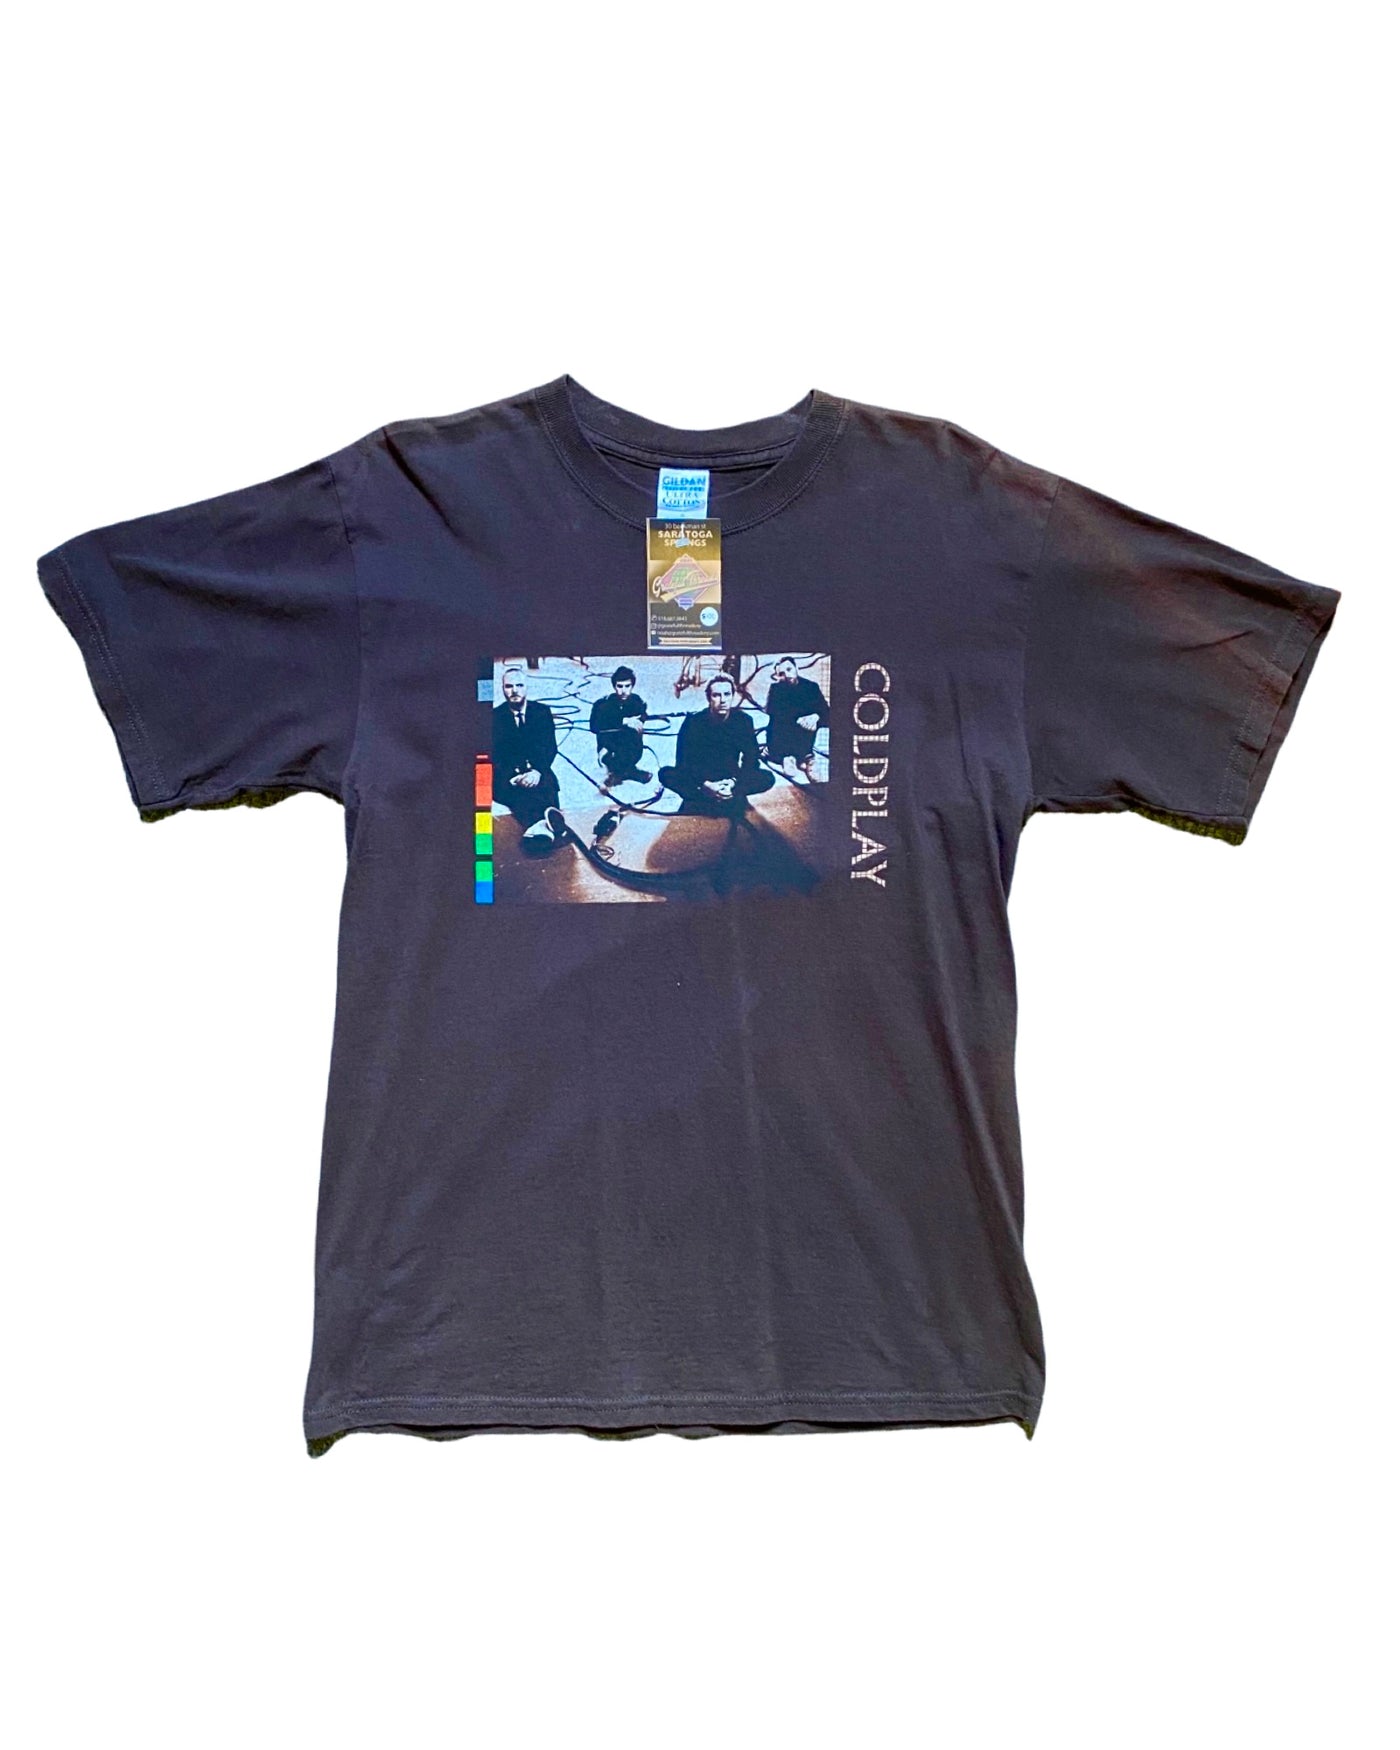 2005 Coldplay Tour T-Shirt